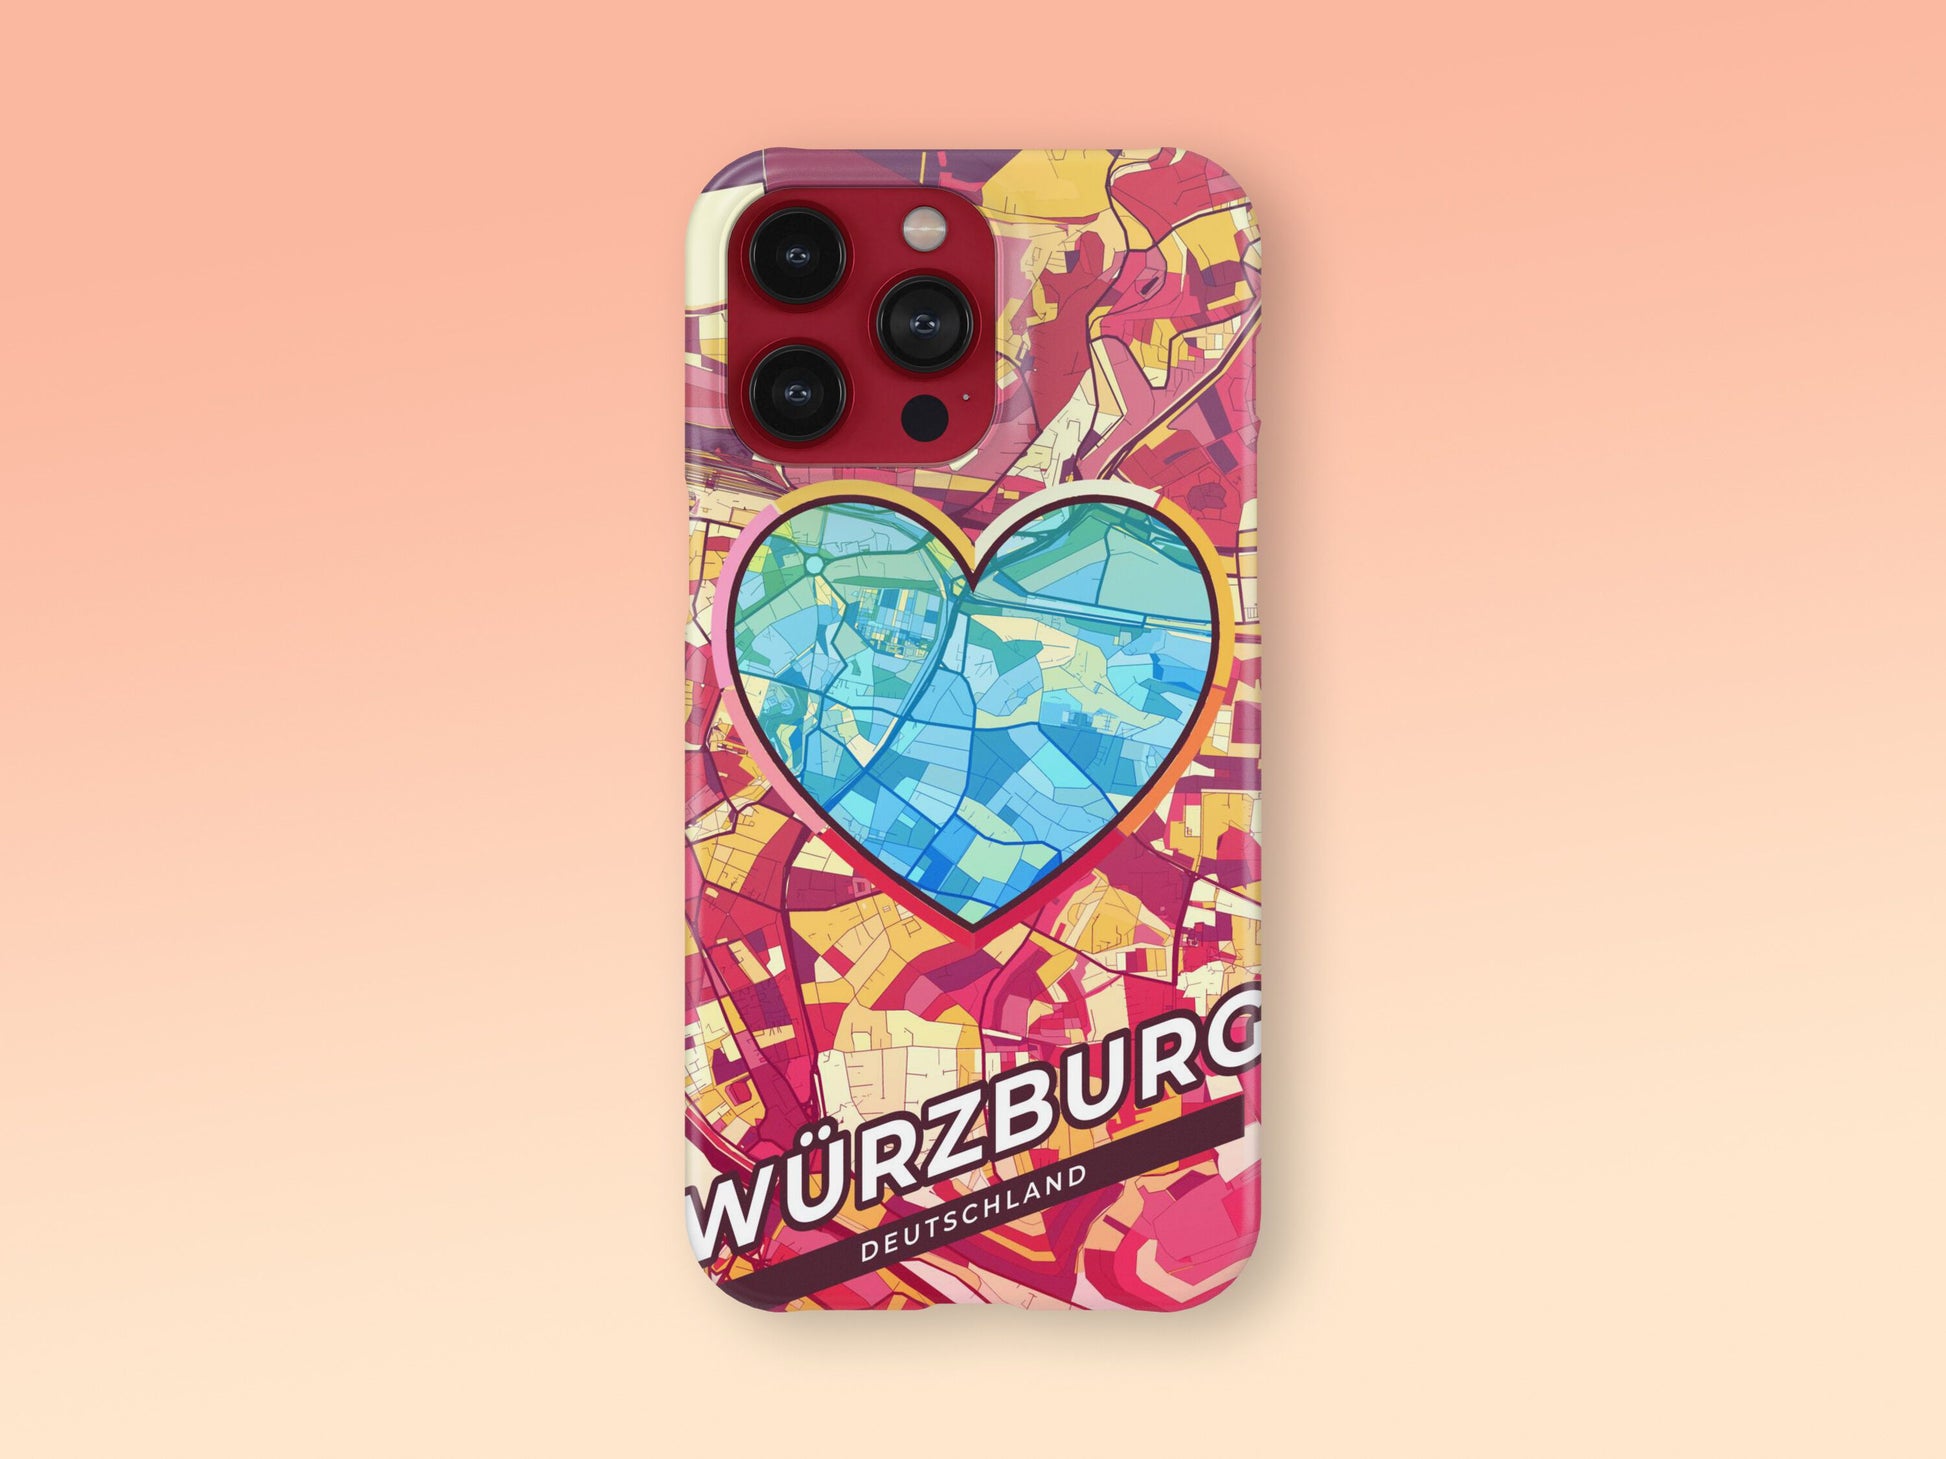 Würzburg Deutschland slim phone case with colorful icon. Birthday, wedding or housewarming gift. Couple match cases. 2